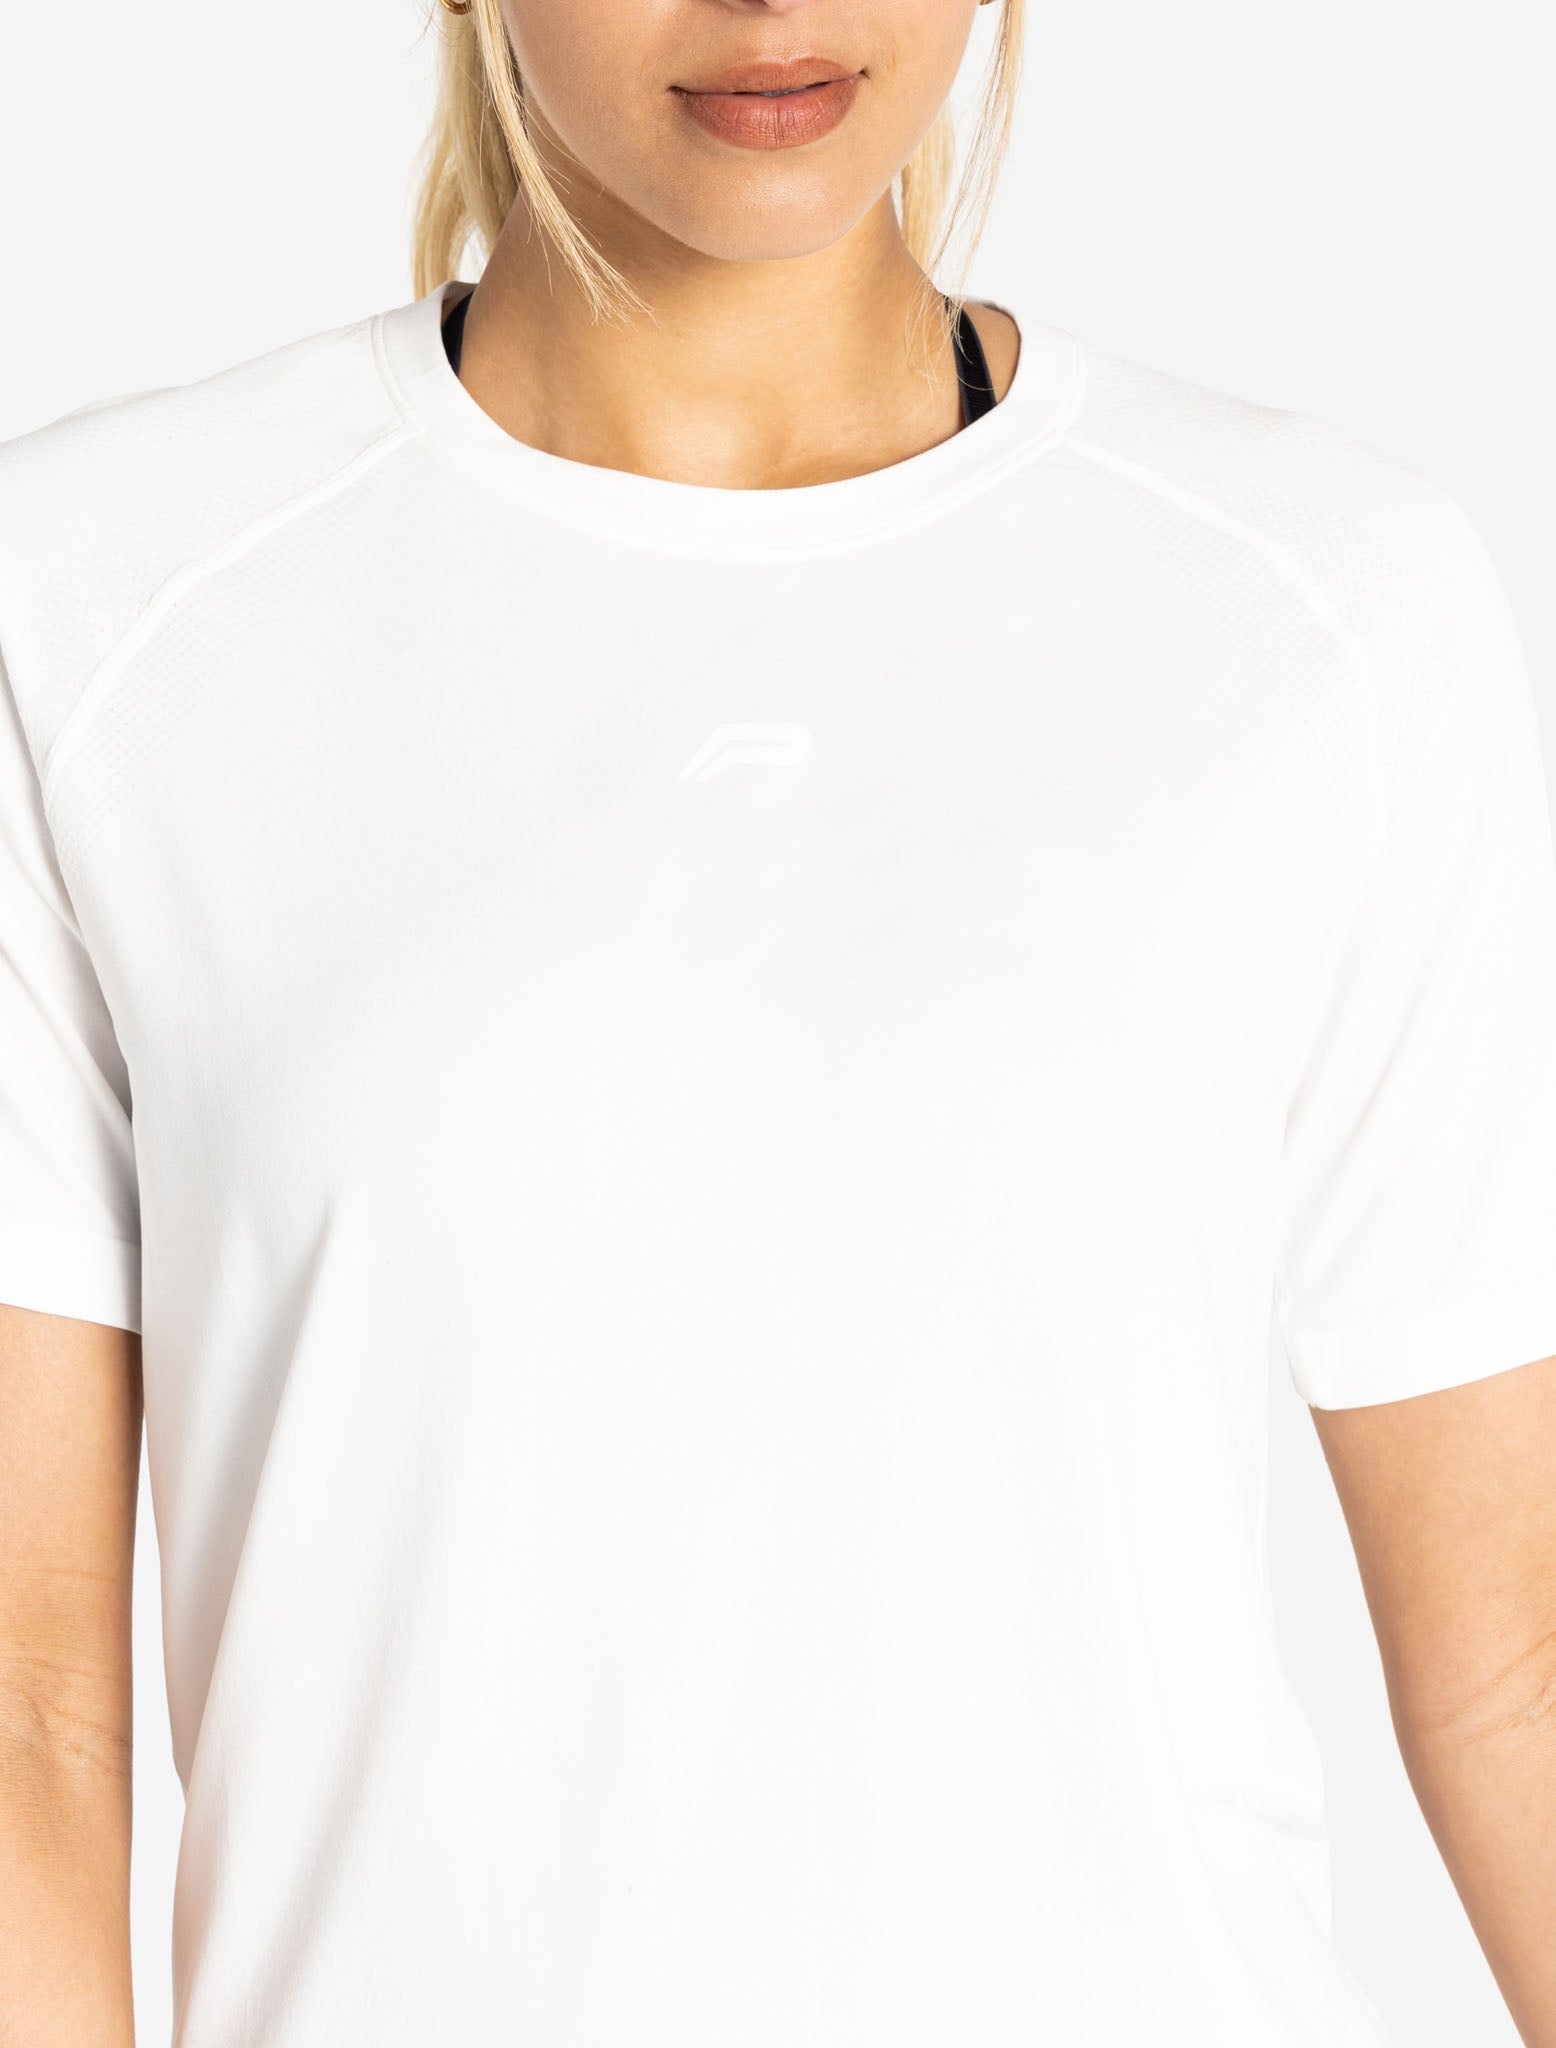 Seamless T-Shirt / White Pursue Fitness 5